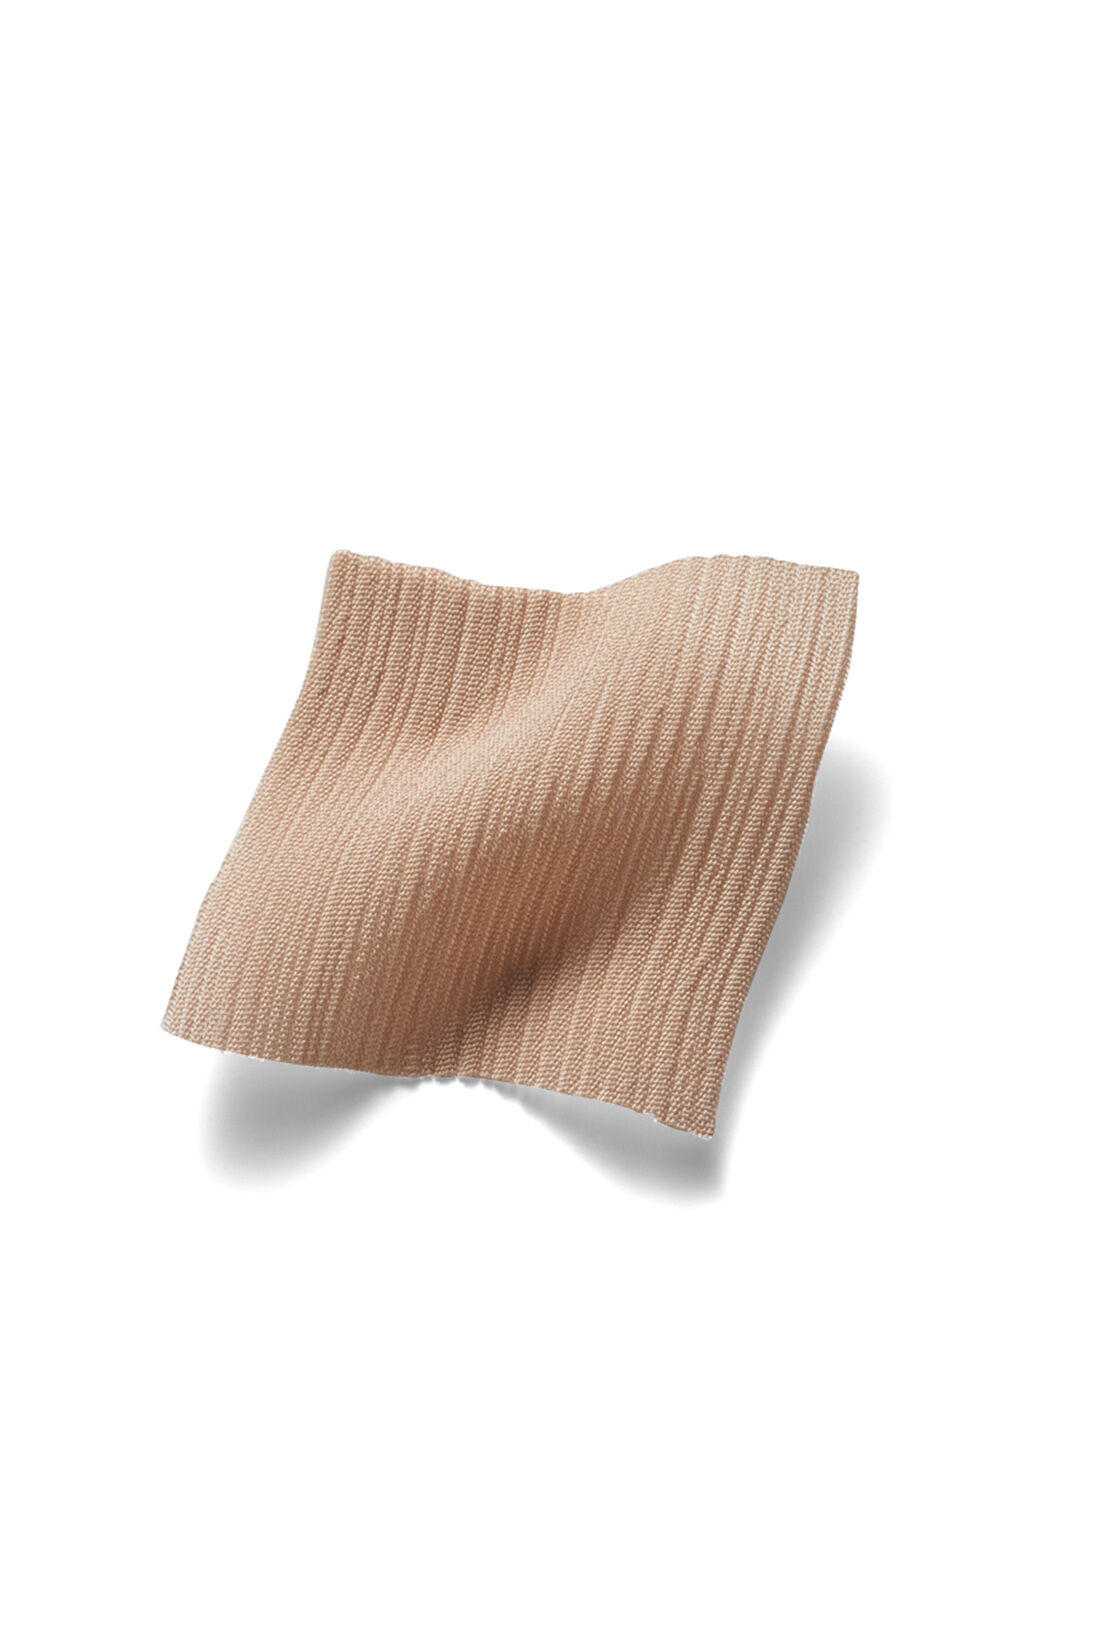 IEDIT|IEDIT[イディット]　接触冷感素材が快適なシアーハーフスリーブシャツ|楊柳（ようりゅう）のような表面感のある、軽やかなひんやりタッチのシアー素材。